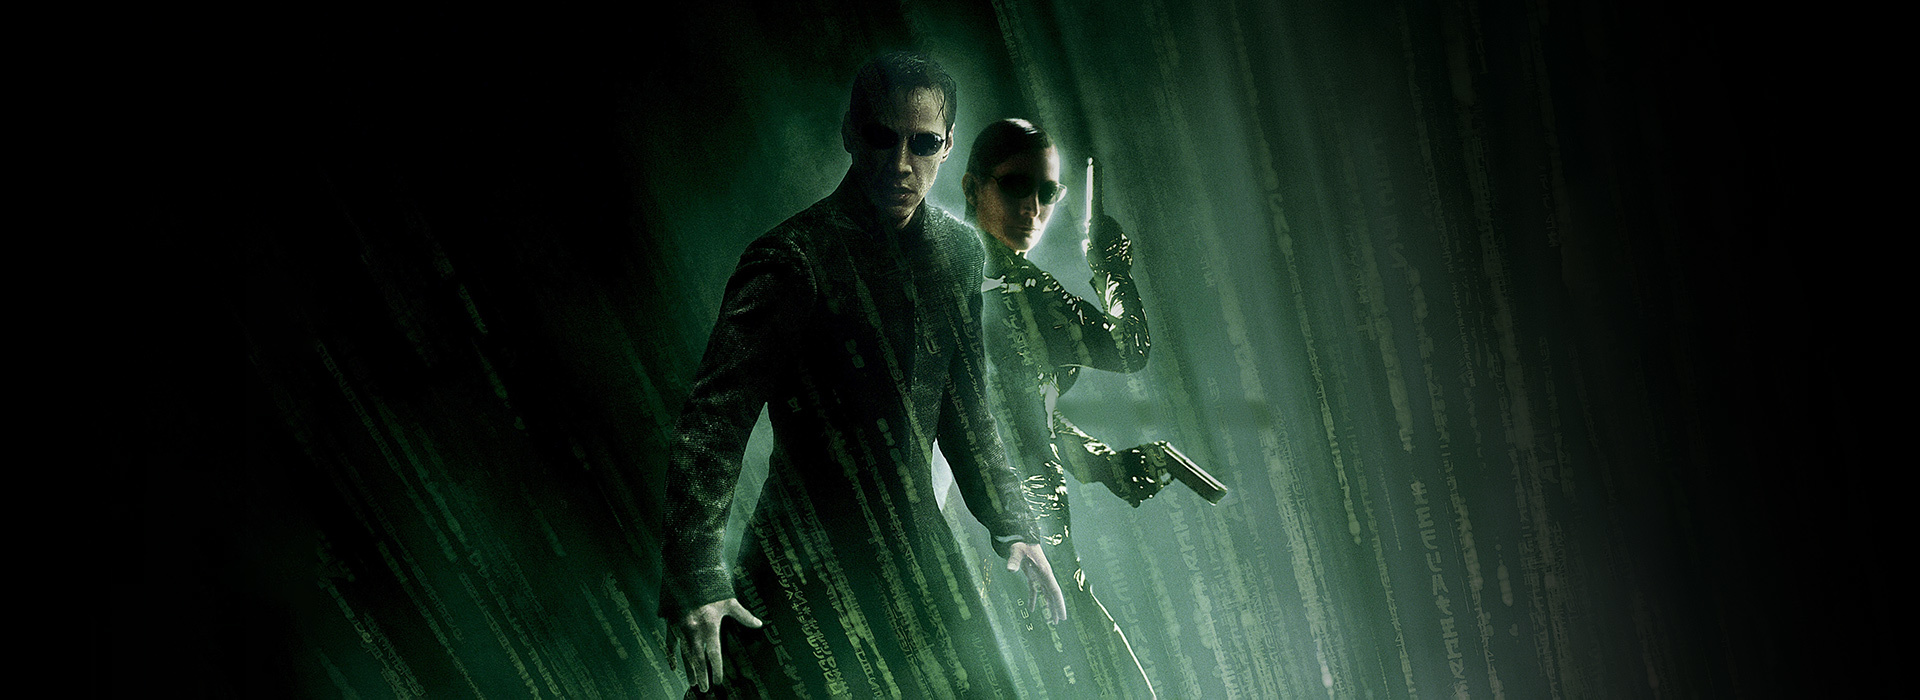 Movie poster The Matrix Revolutions